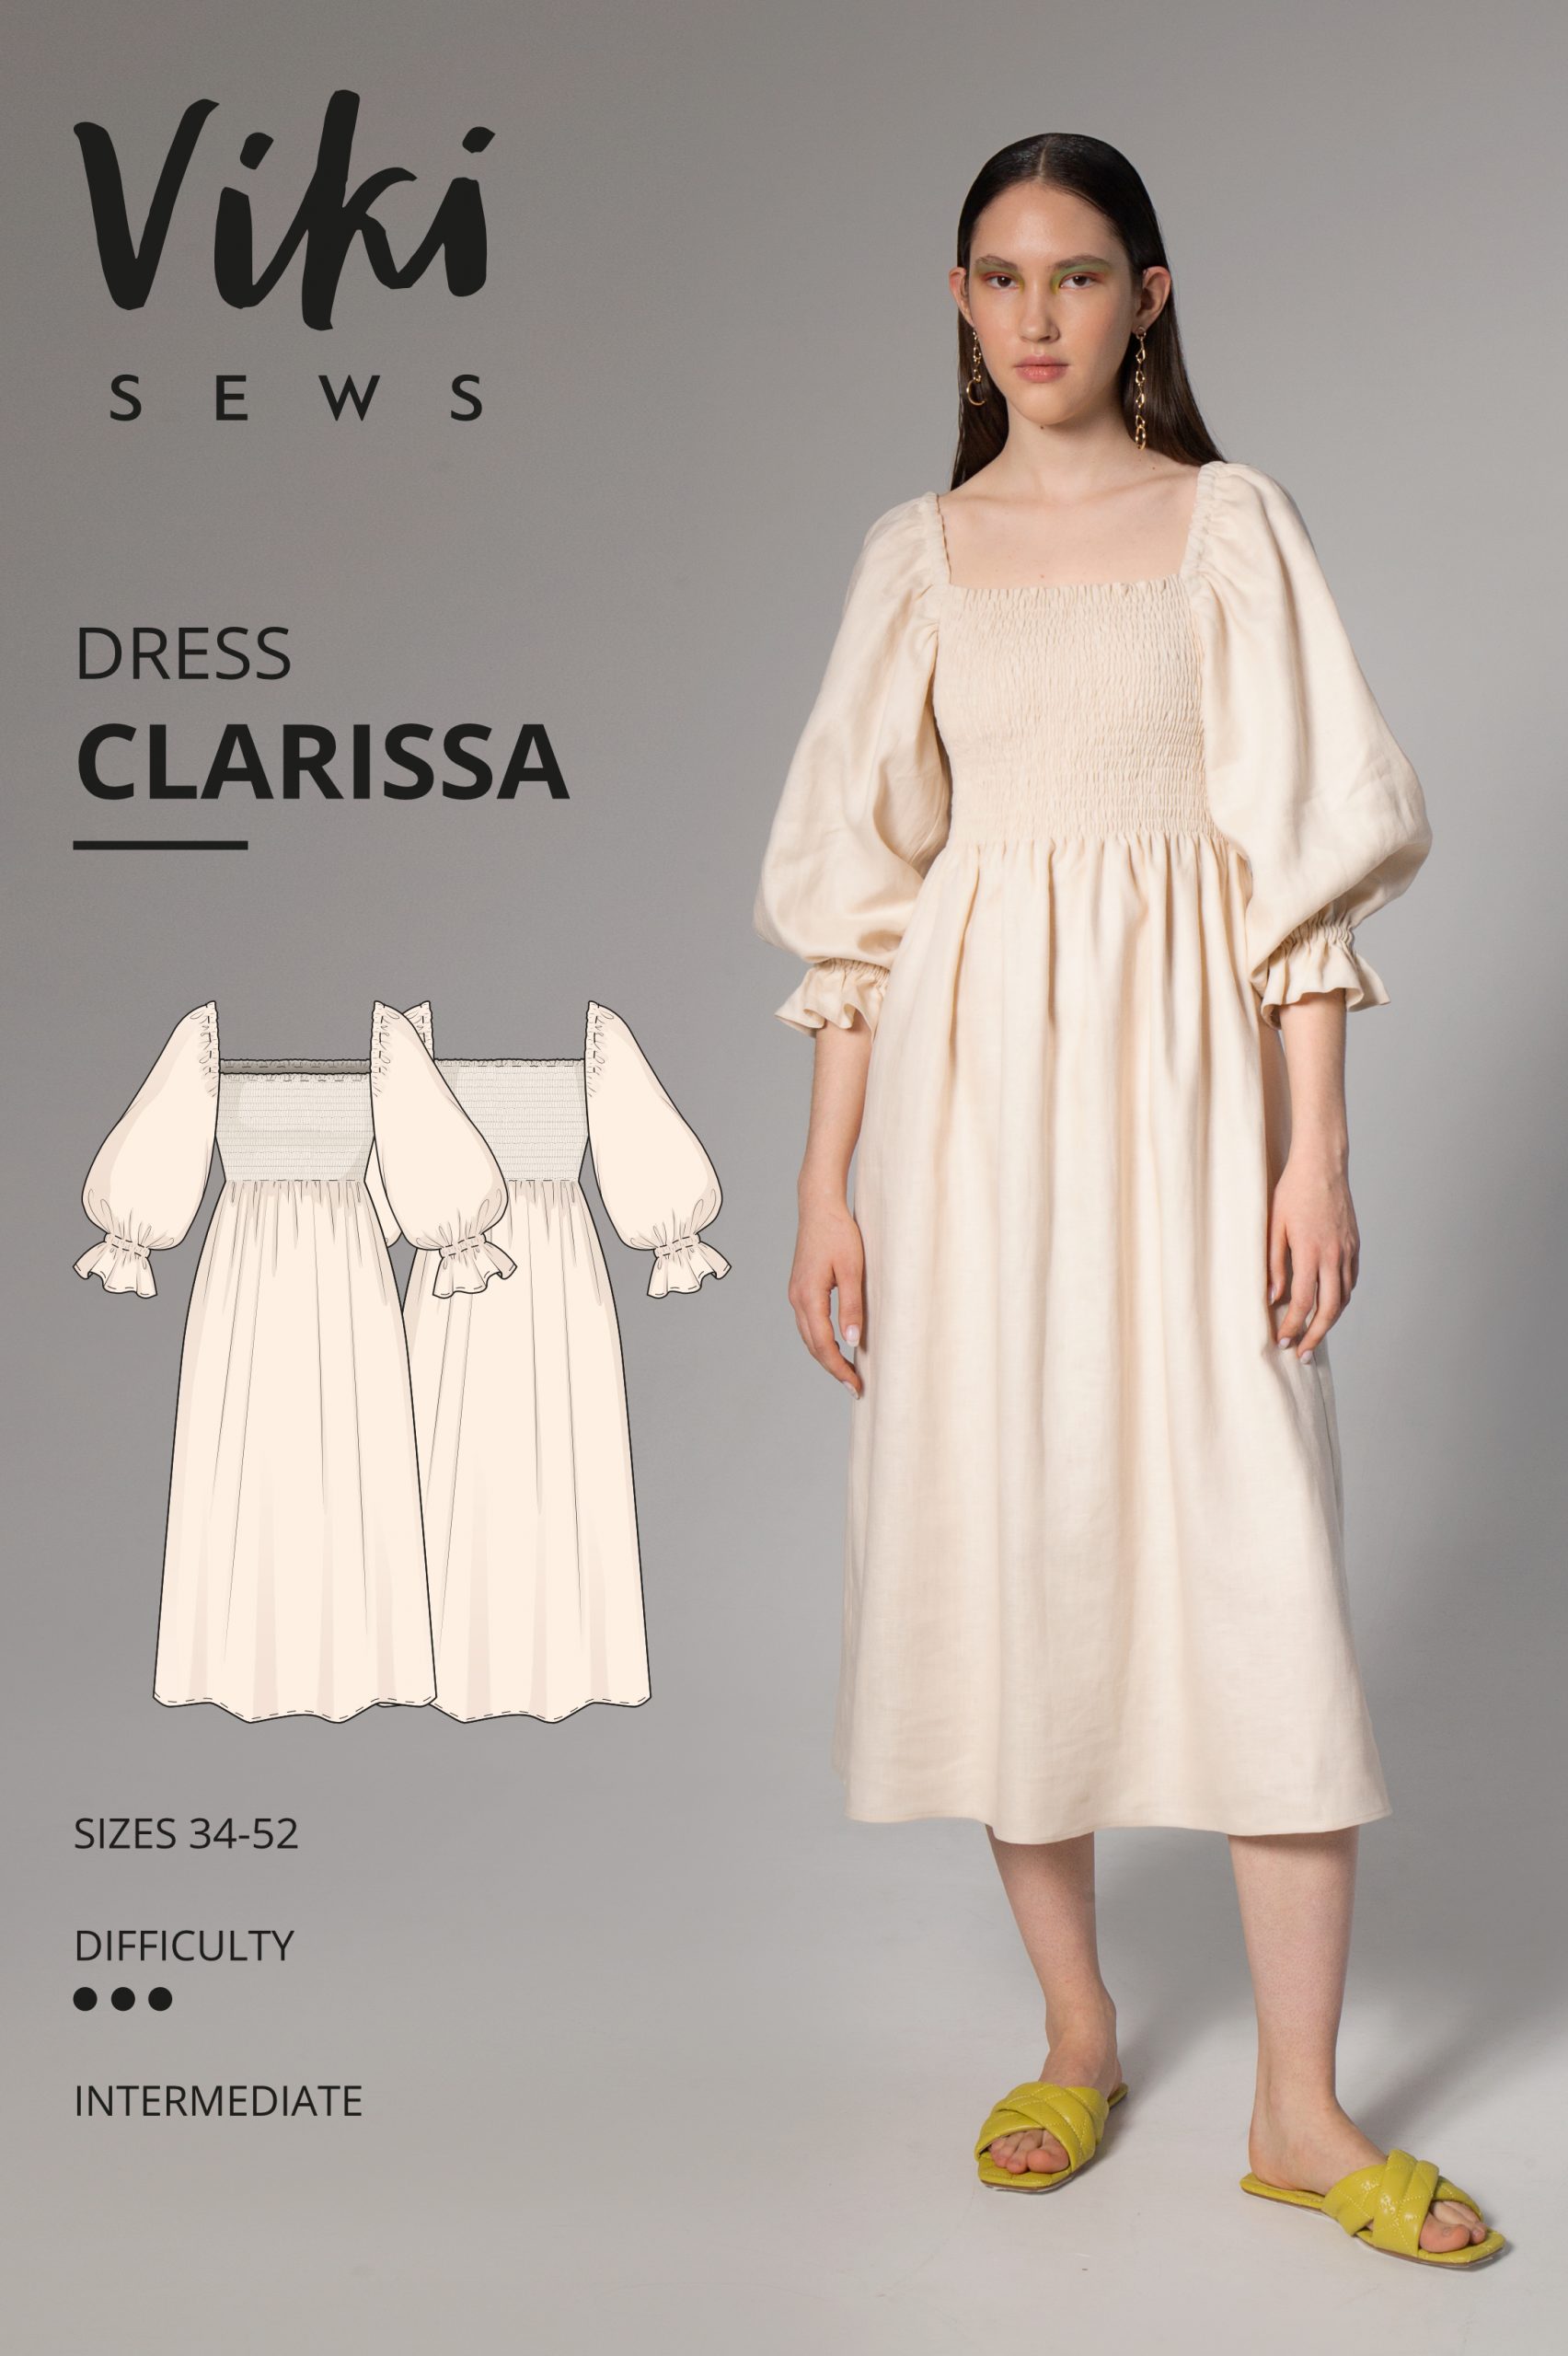 Vikisews Clarissa Dress PDF